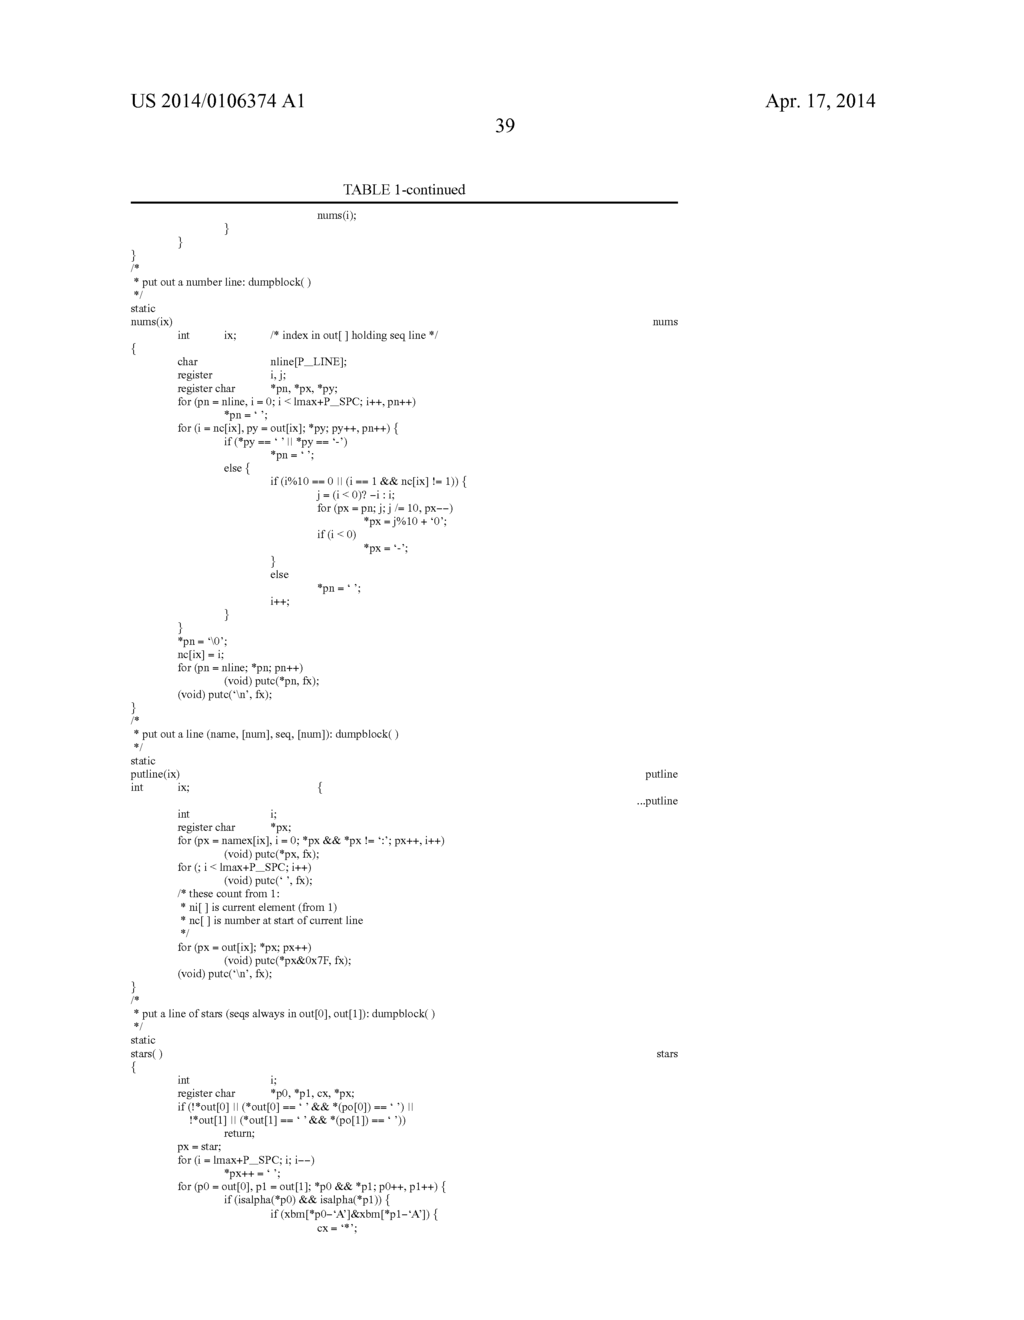 ANTI-FcRH5 ANTIBODIES AND IMMUNOCONJUGATES AND METHODS OF USE - diagram, schematic, and image 90